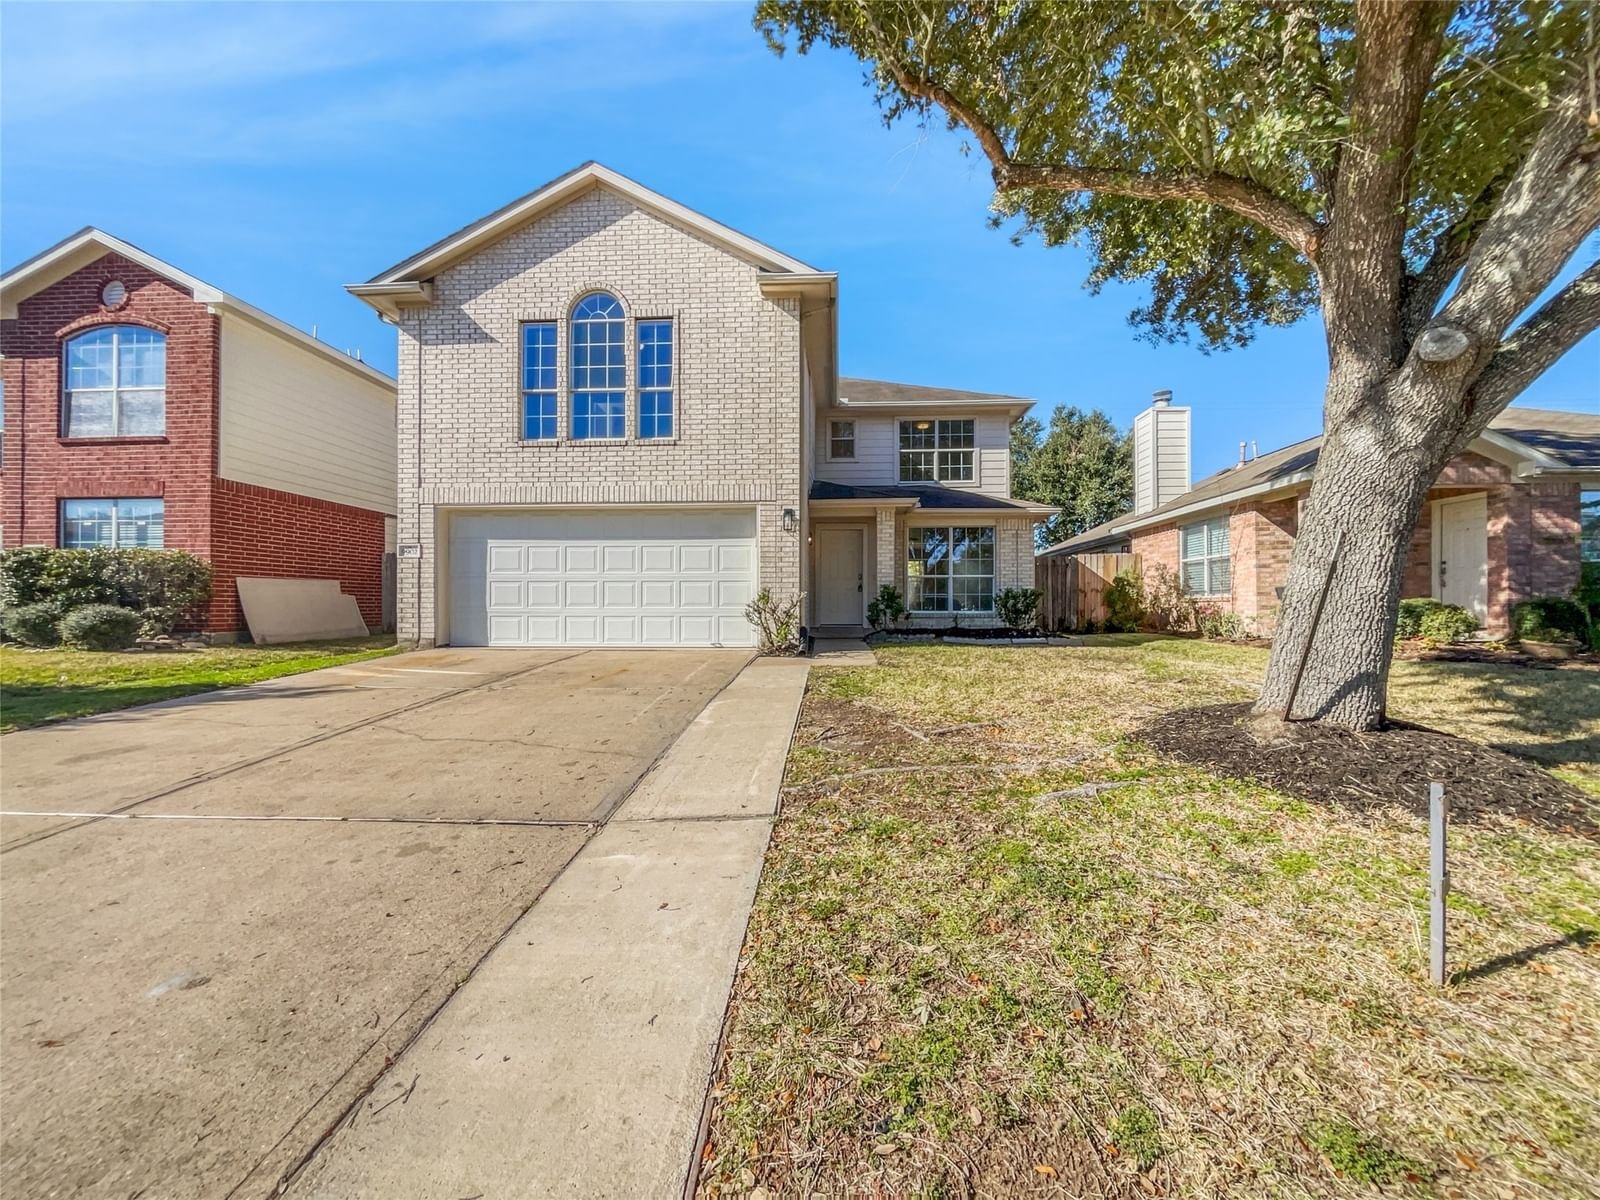 Real estate property located at 9902 Kingsville Park, Harris, Kingsville Park Sec 02, Houston, TX, US